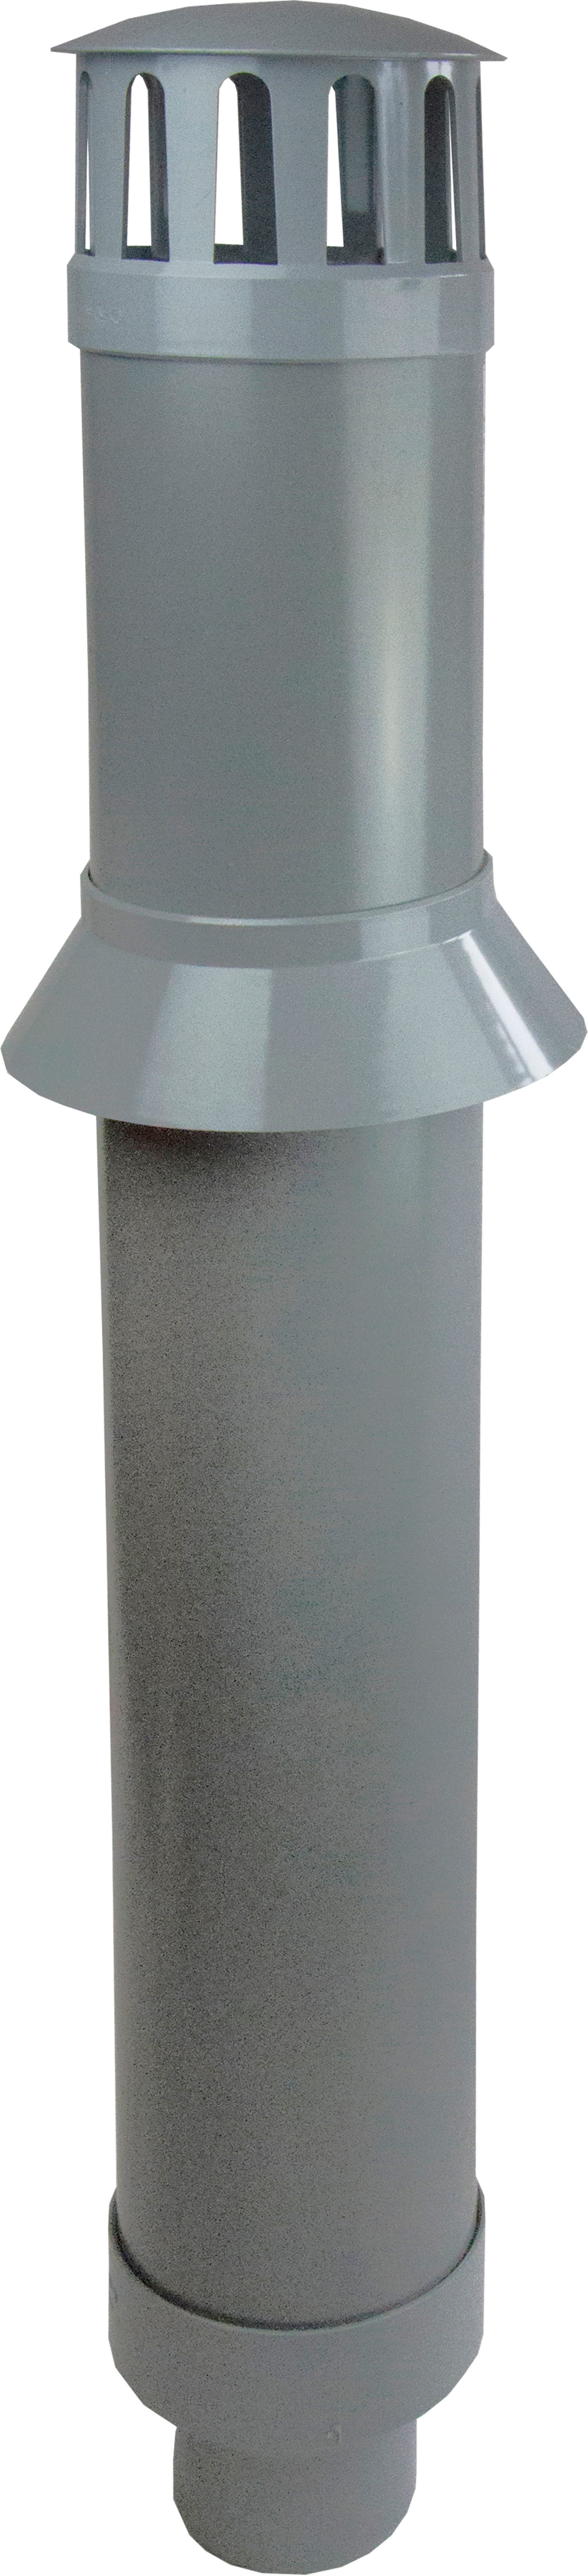 Ventilation chimney for Indoor drainage Kaczmarek PVC-U 160 / 110 mm